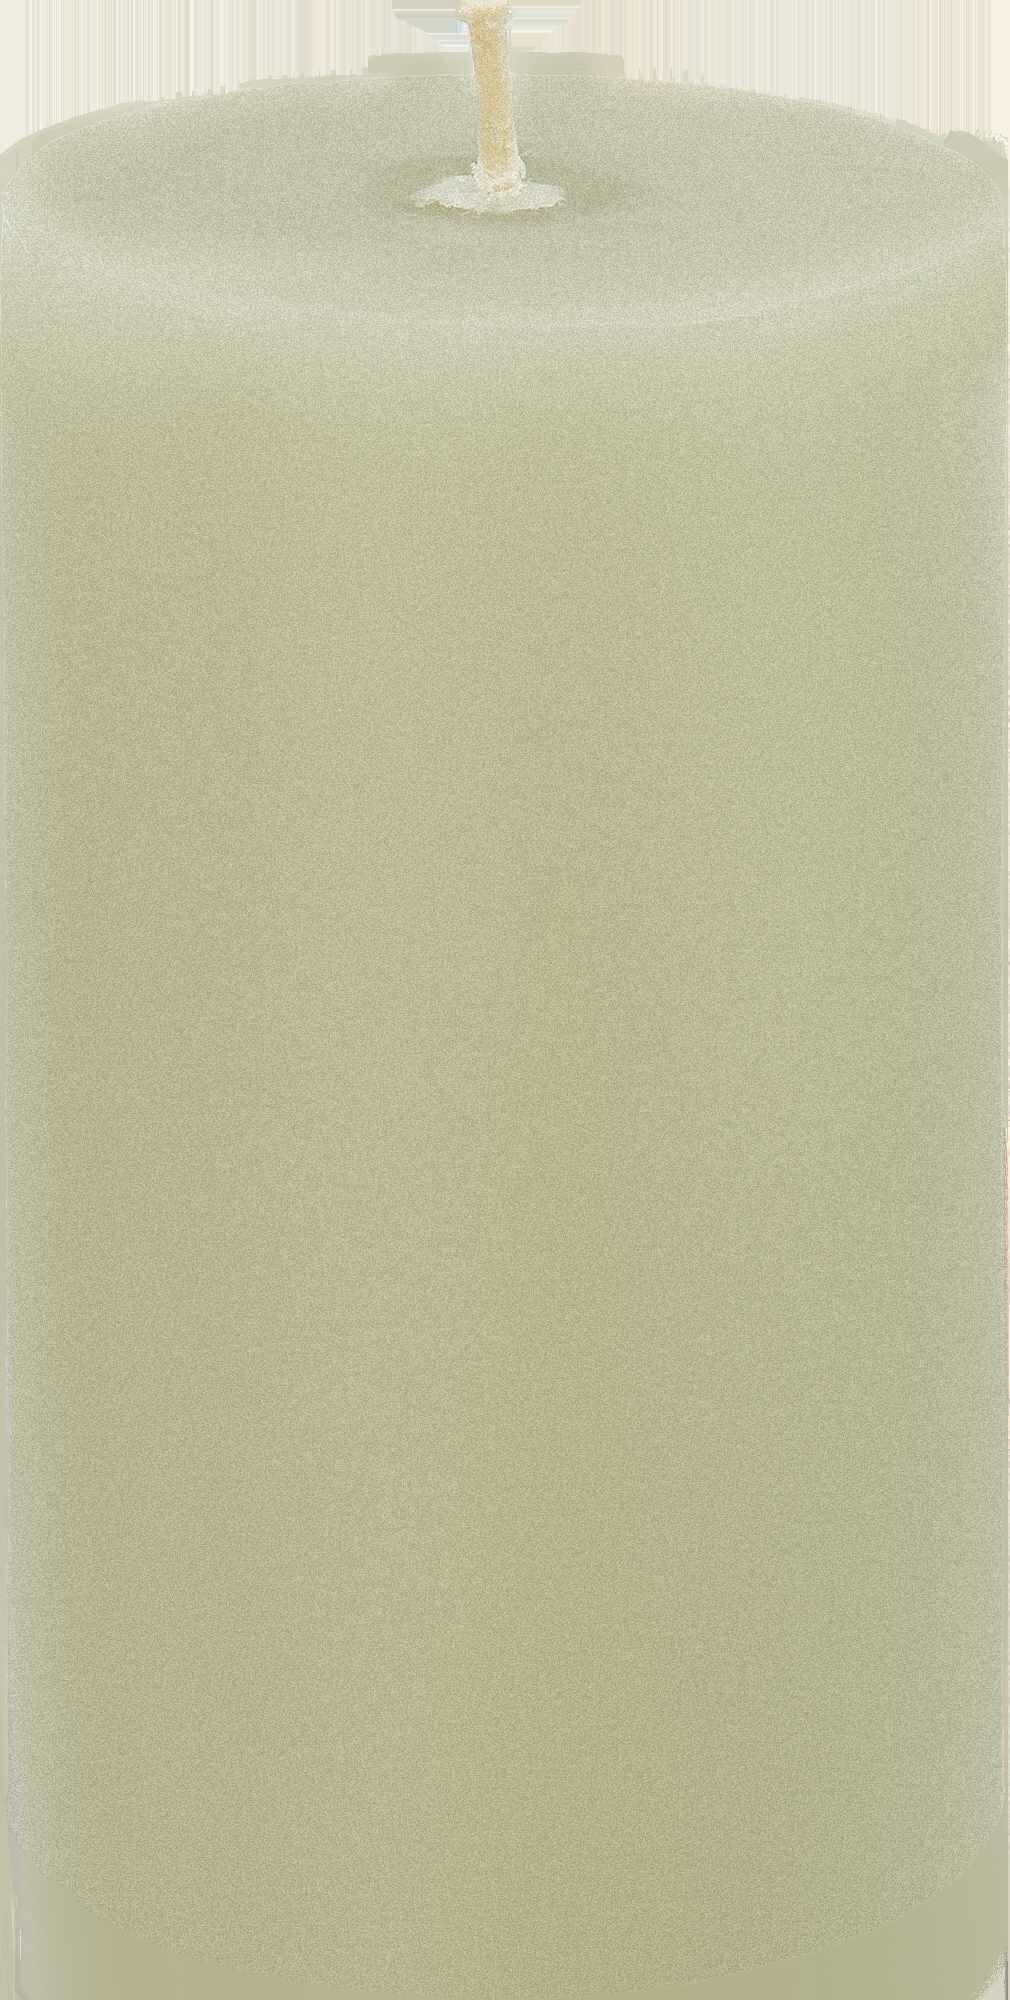 Свеча столбик Рустик светло-серая 11 см